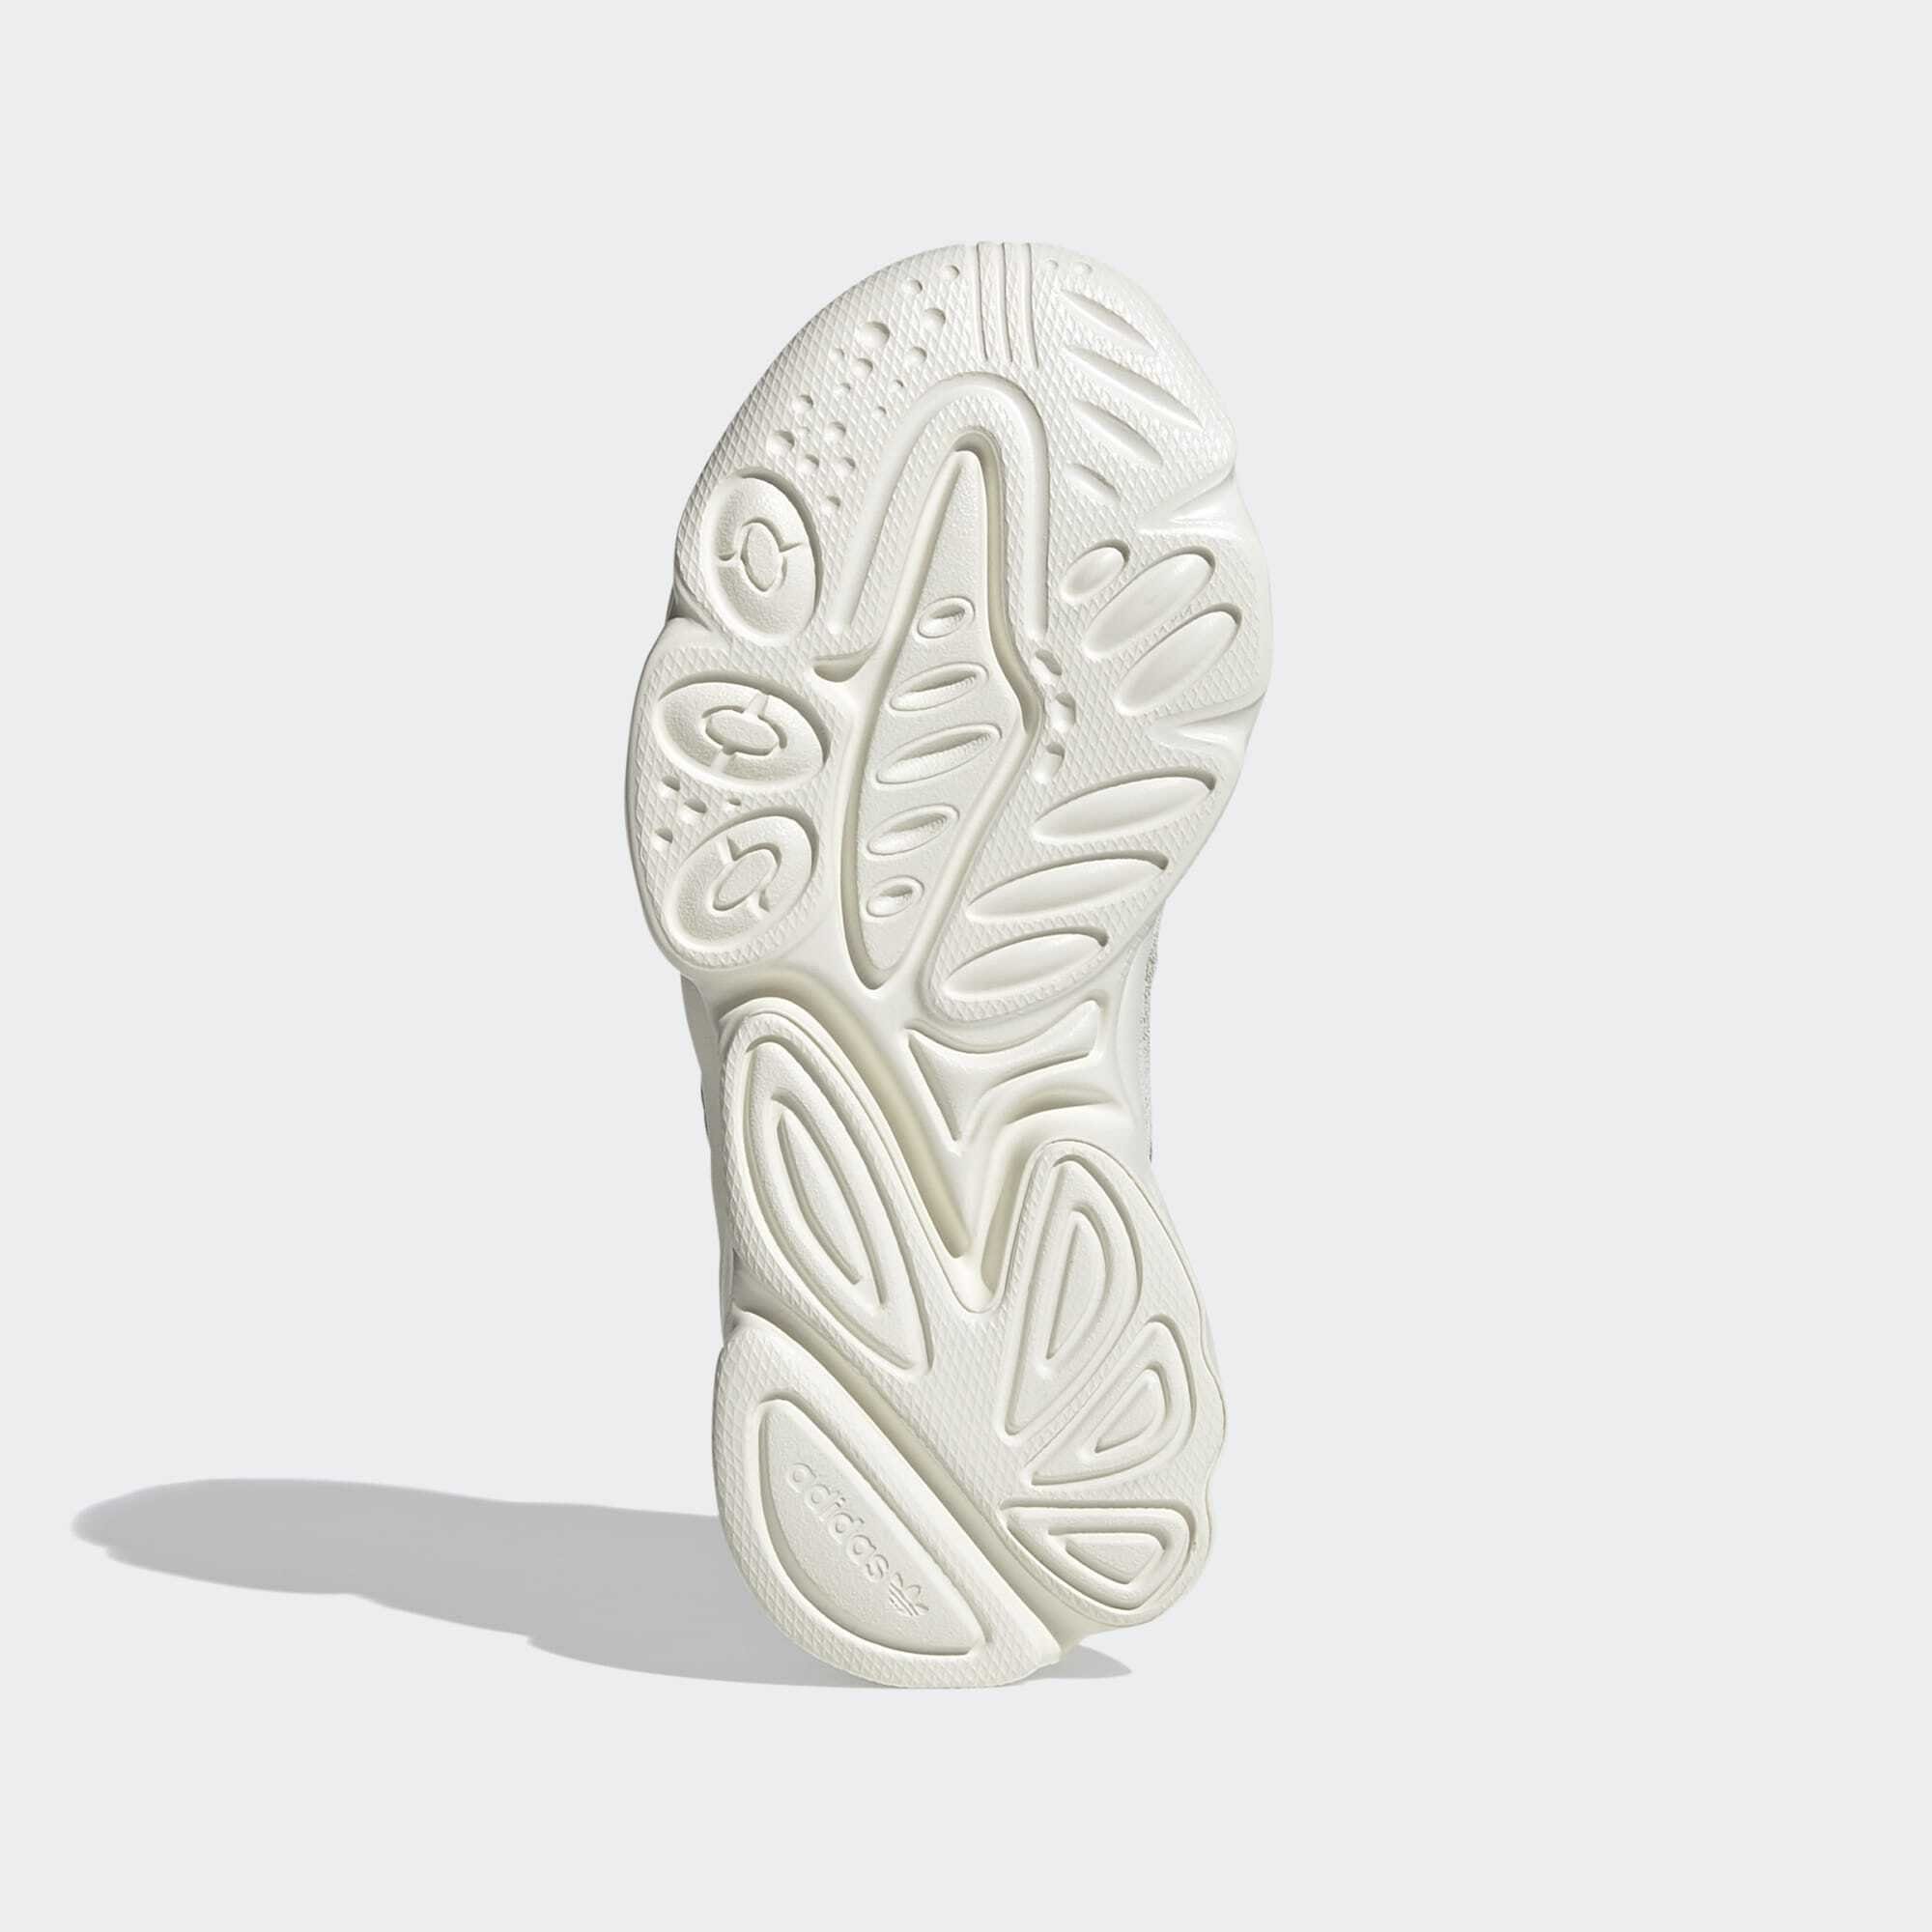 adidas Originals OZWEEGO SCHUH Sneaker Crystal White Off / Cloud White White 